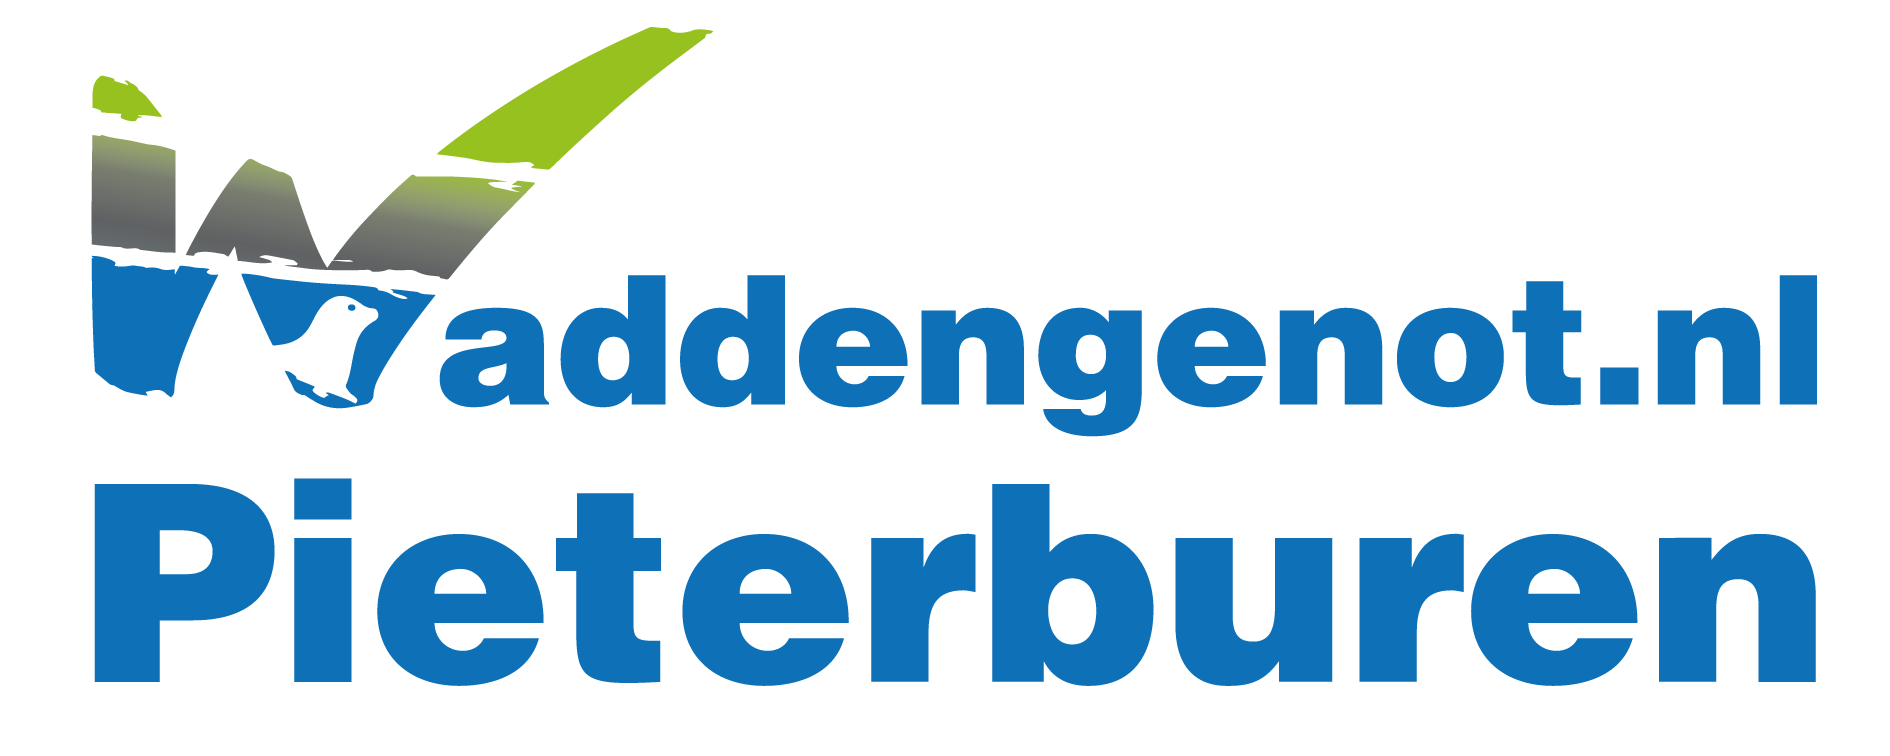 Waddengenot Pieterburen logo